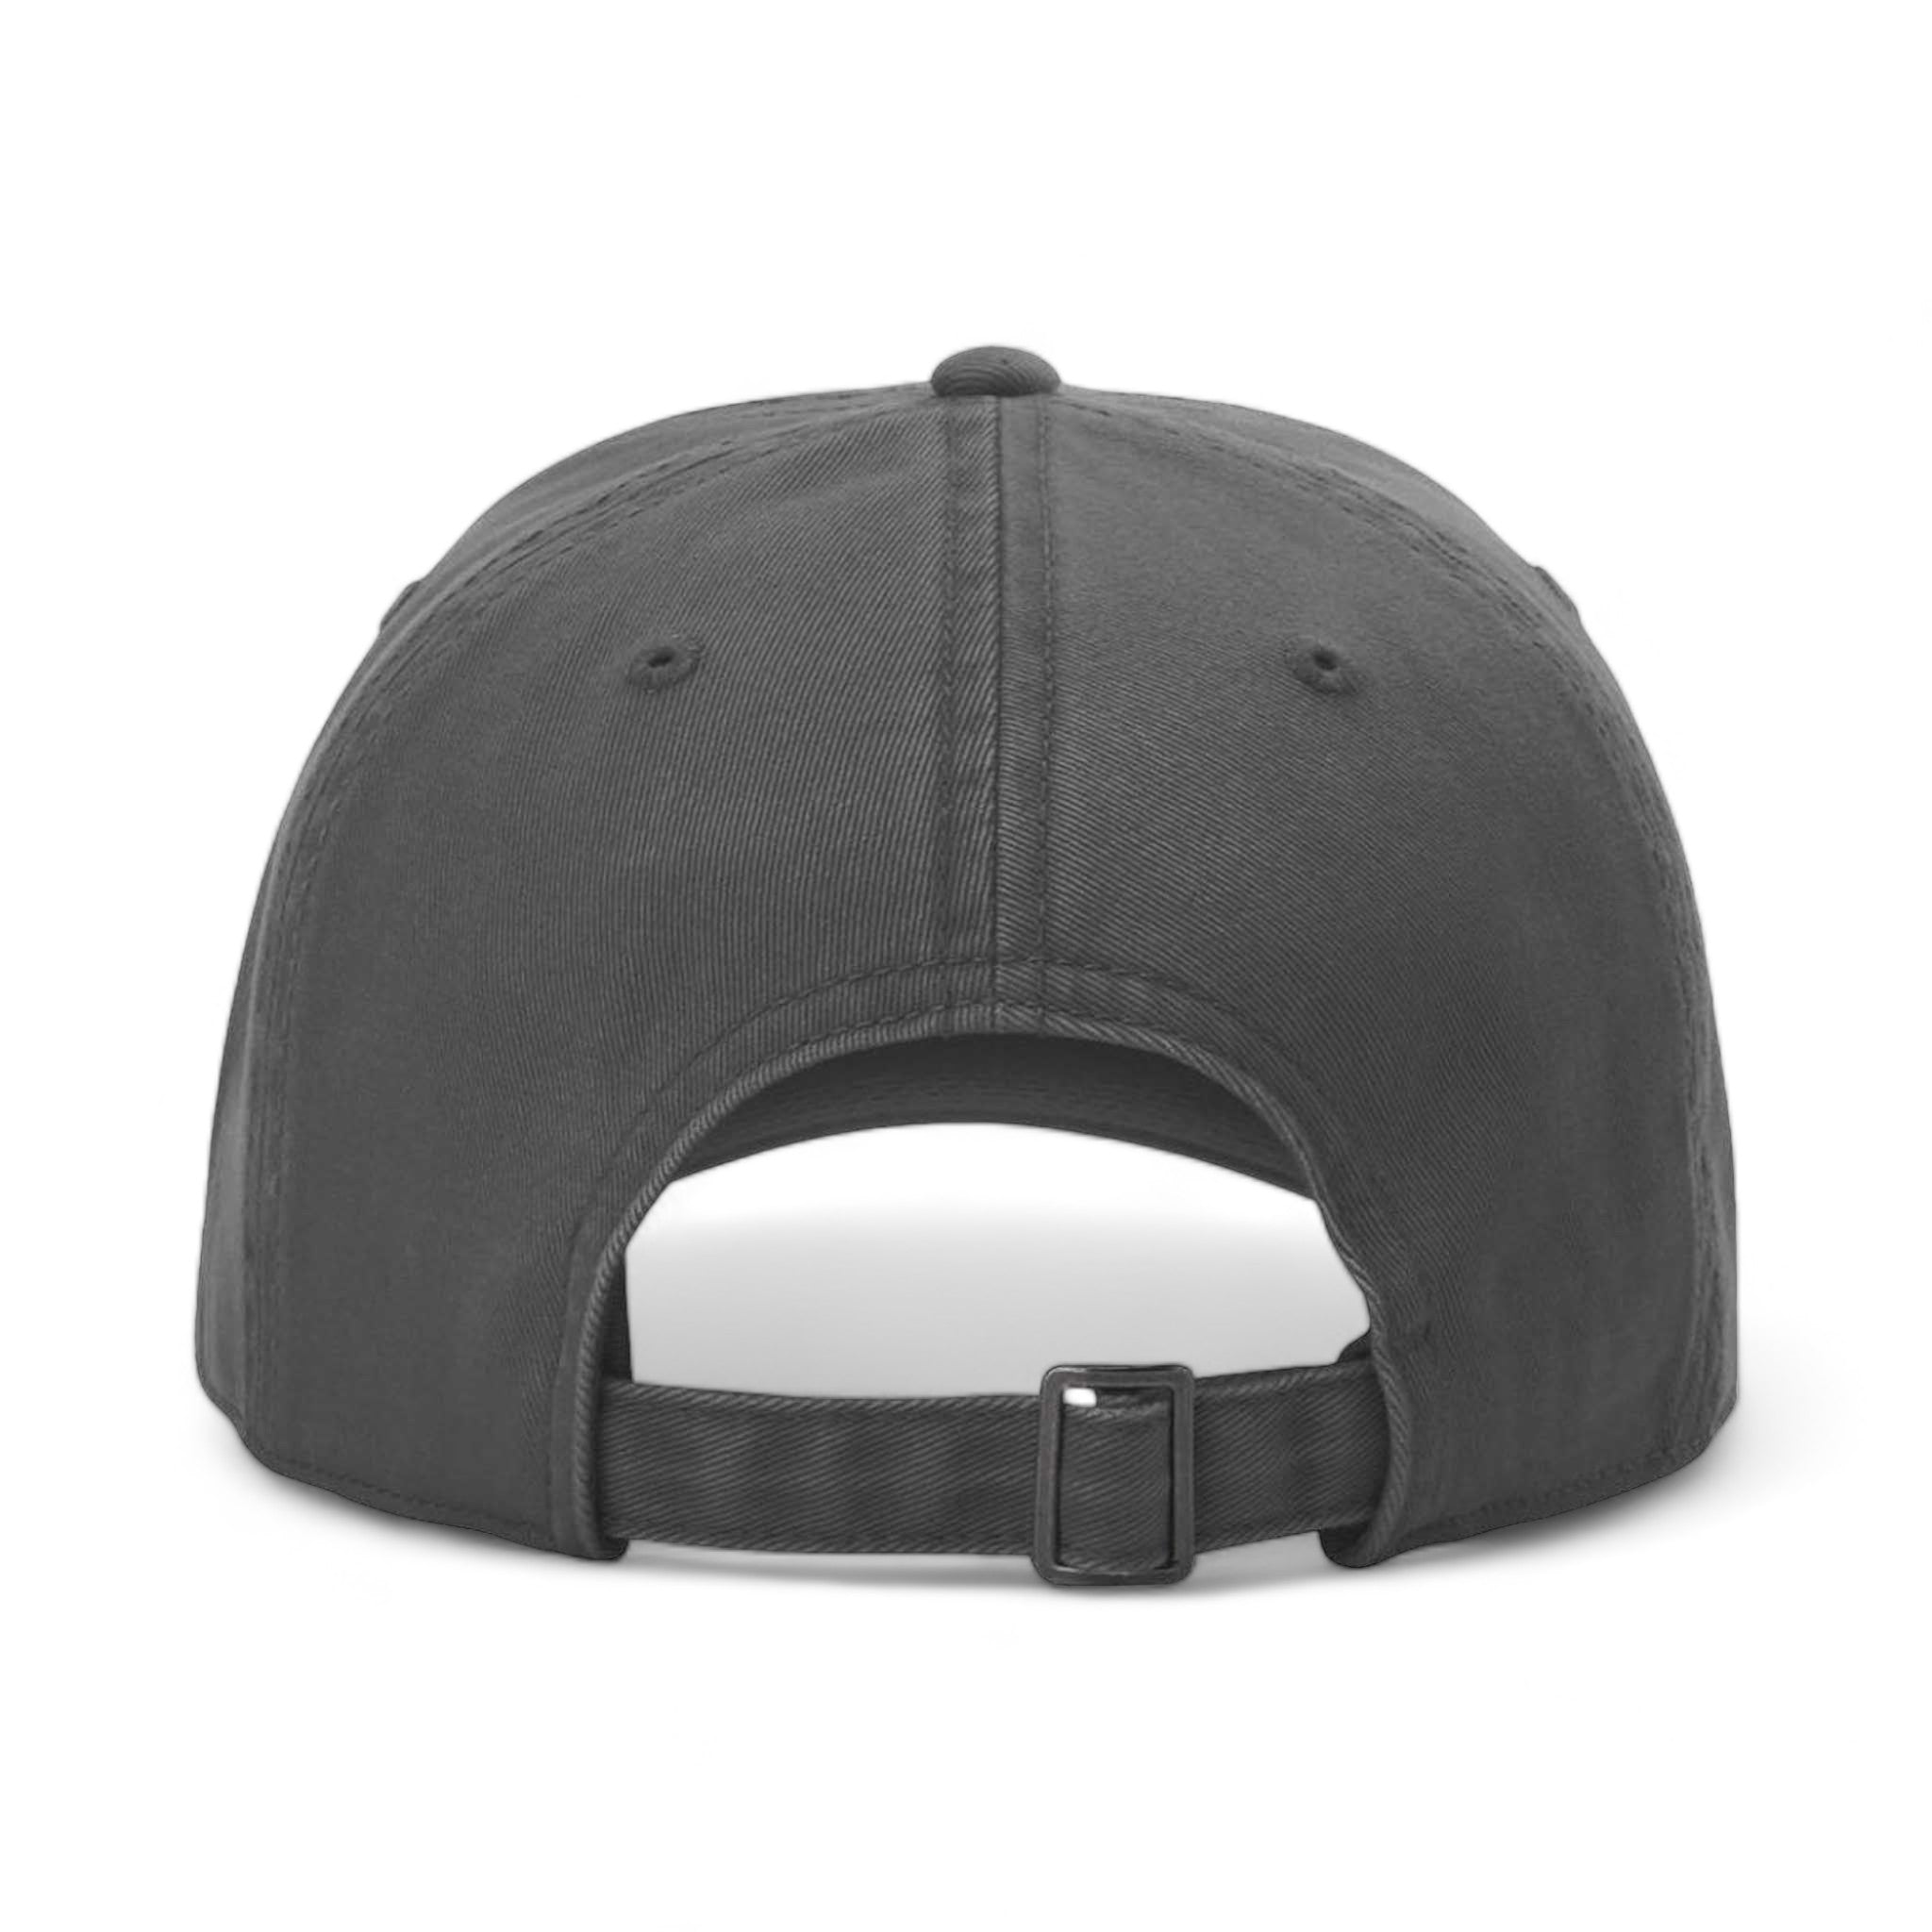 Back view of Richardson 326 custom hat in grey